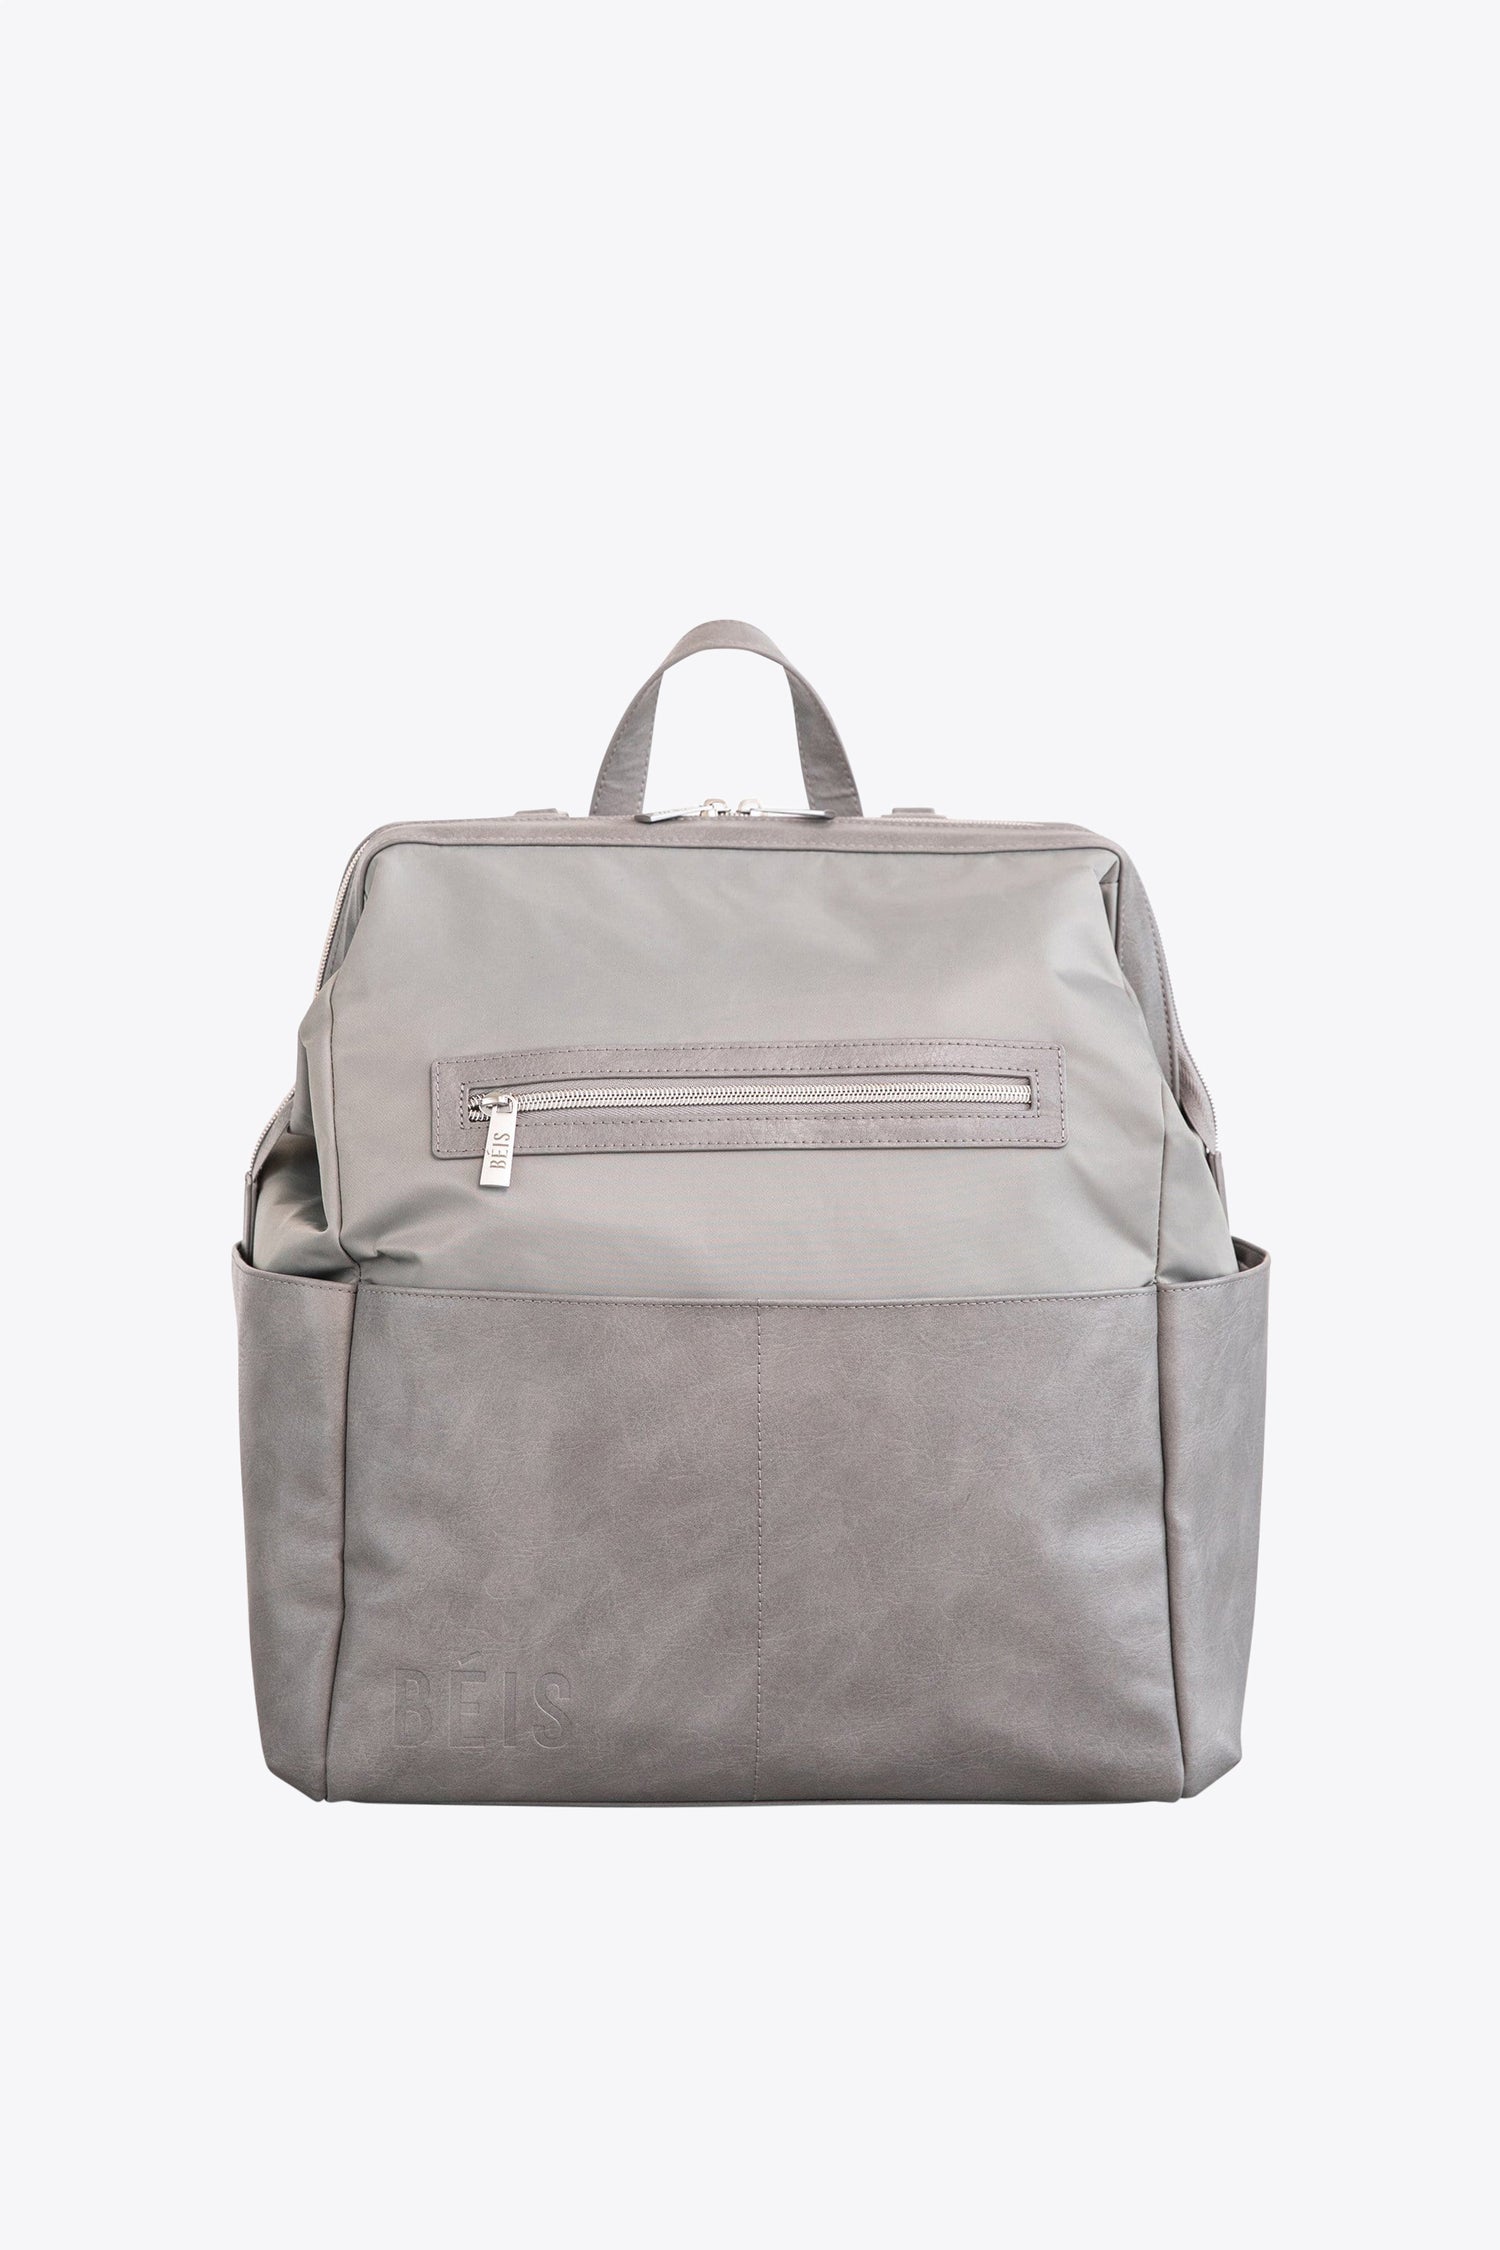 The Backpack Diaper Bag